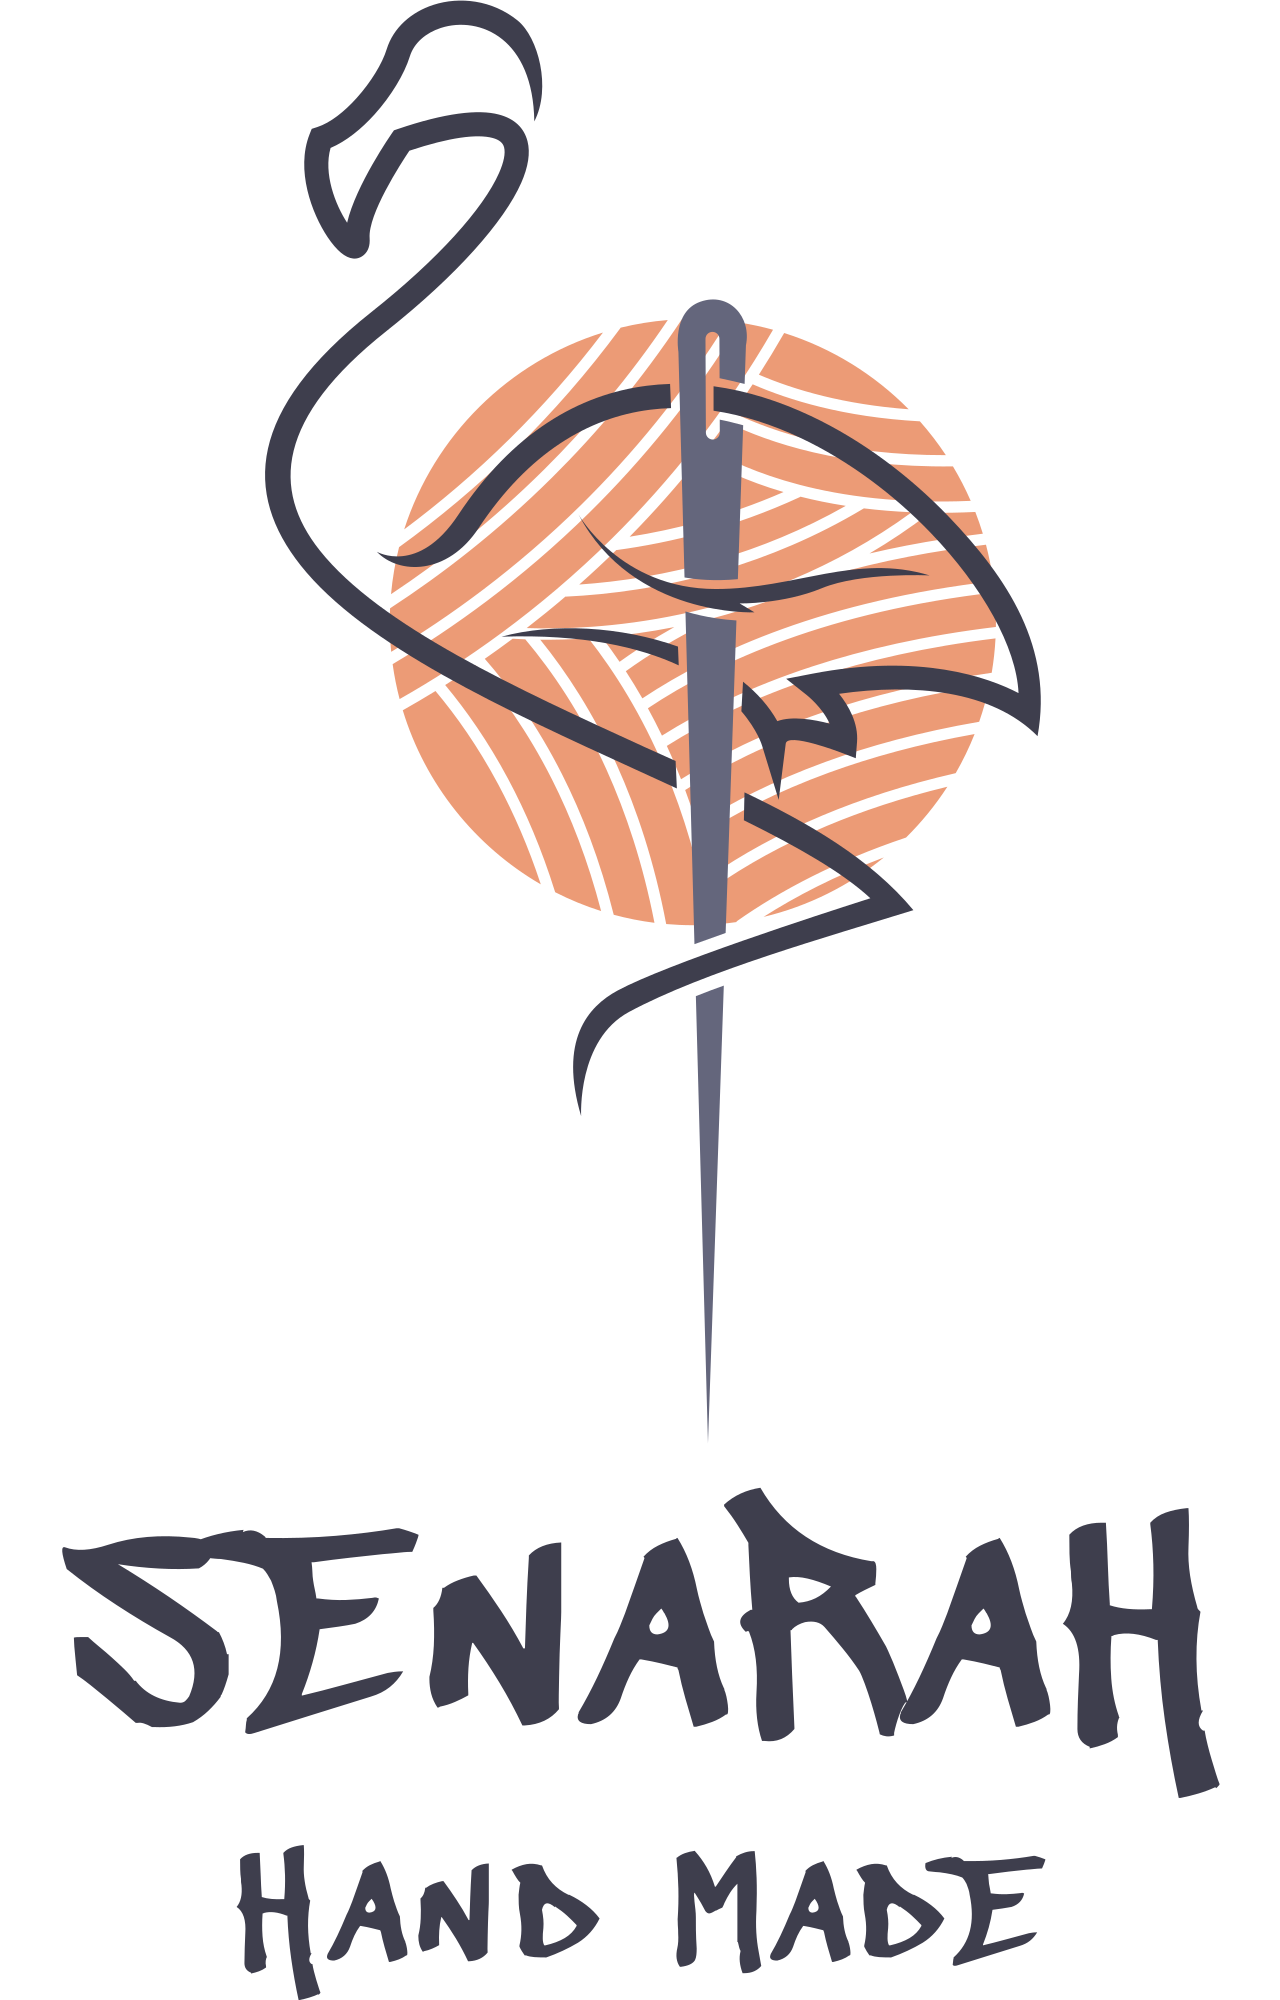 Senarah's web page